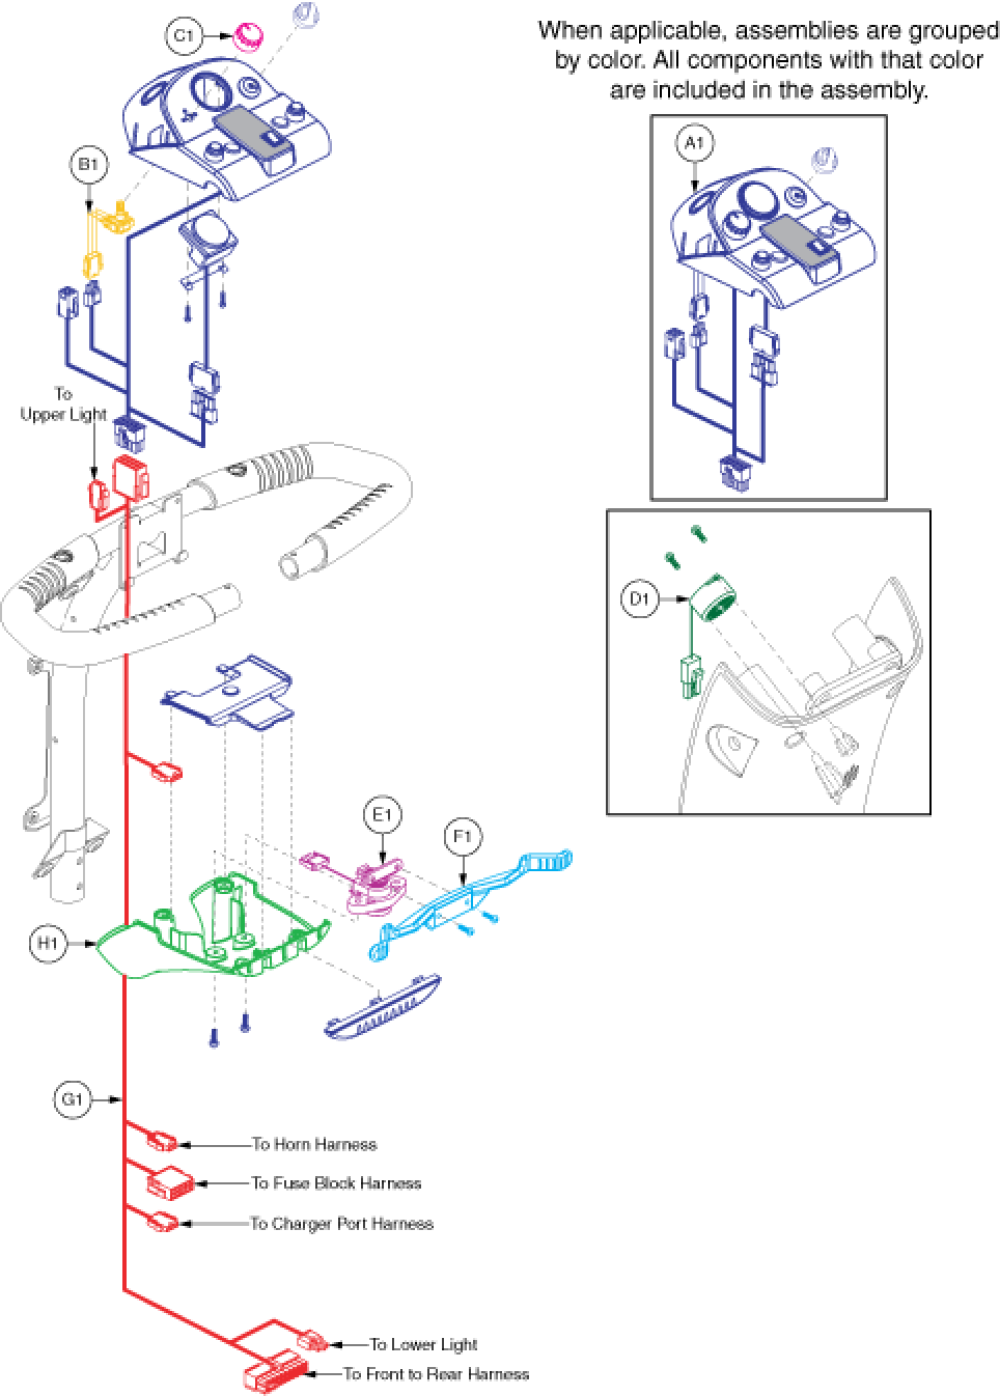 Electrical Assembly - Console, Sc710va parts diagram